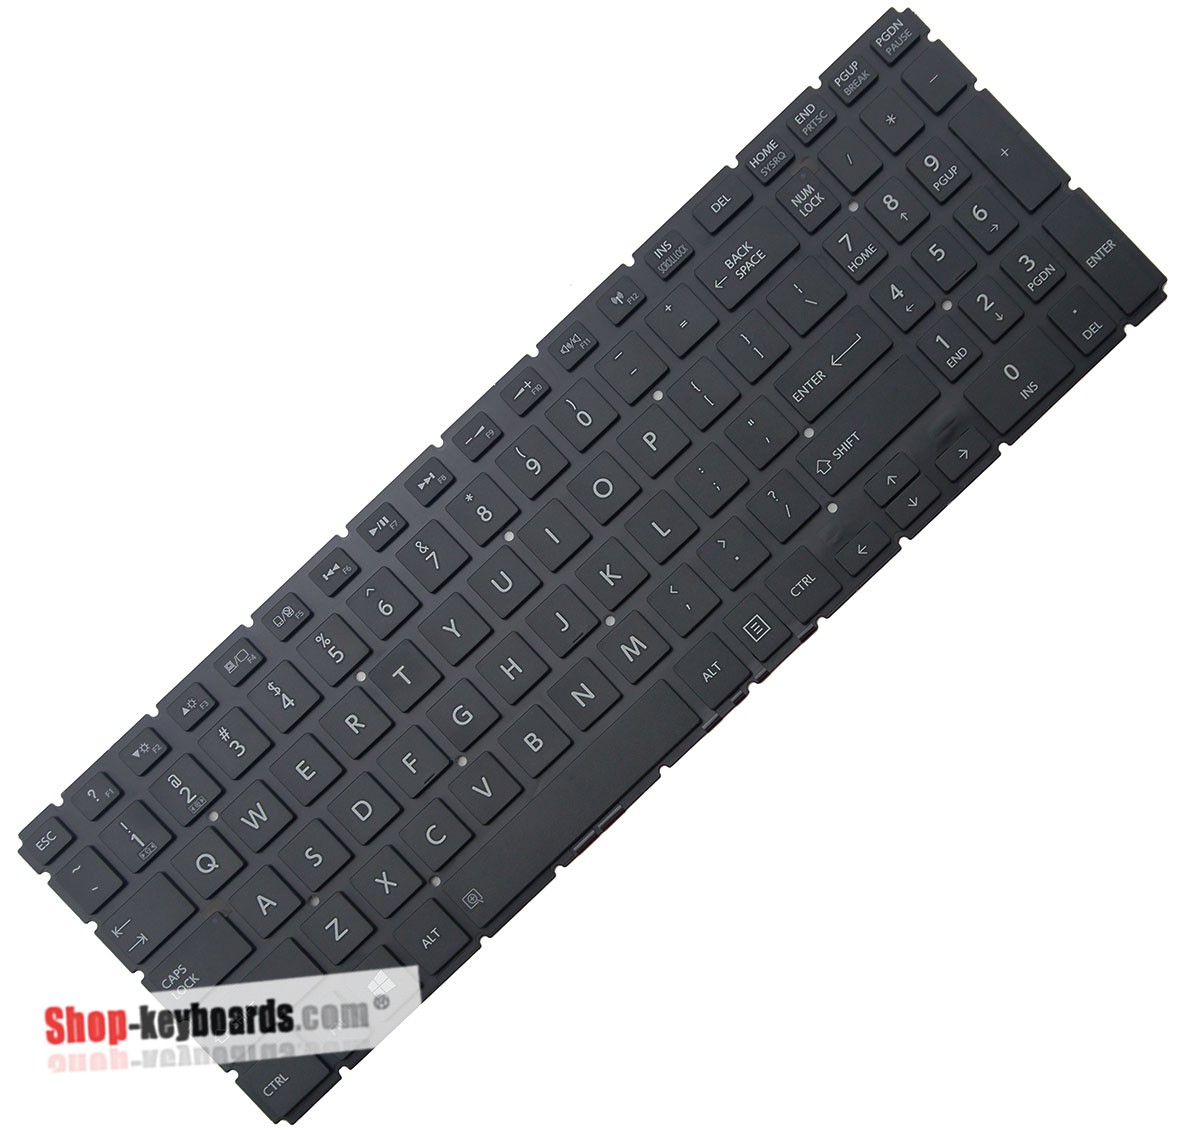 Toshiba AEBLYF00220 Keyboard replacement